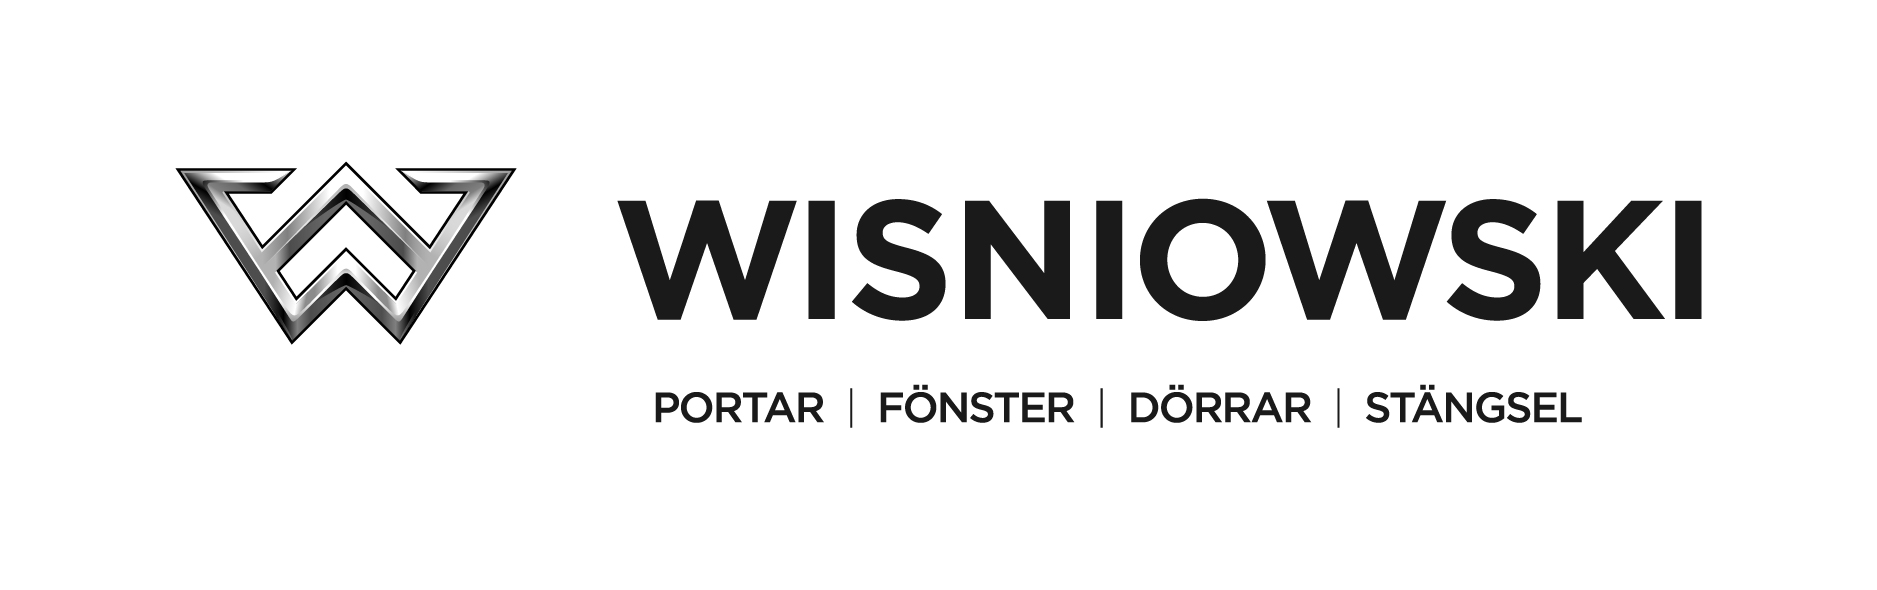 sv_WISNIOWSKI horizontal@4x-100